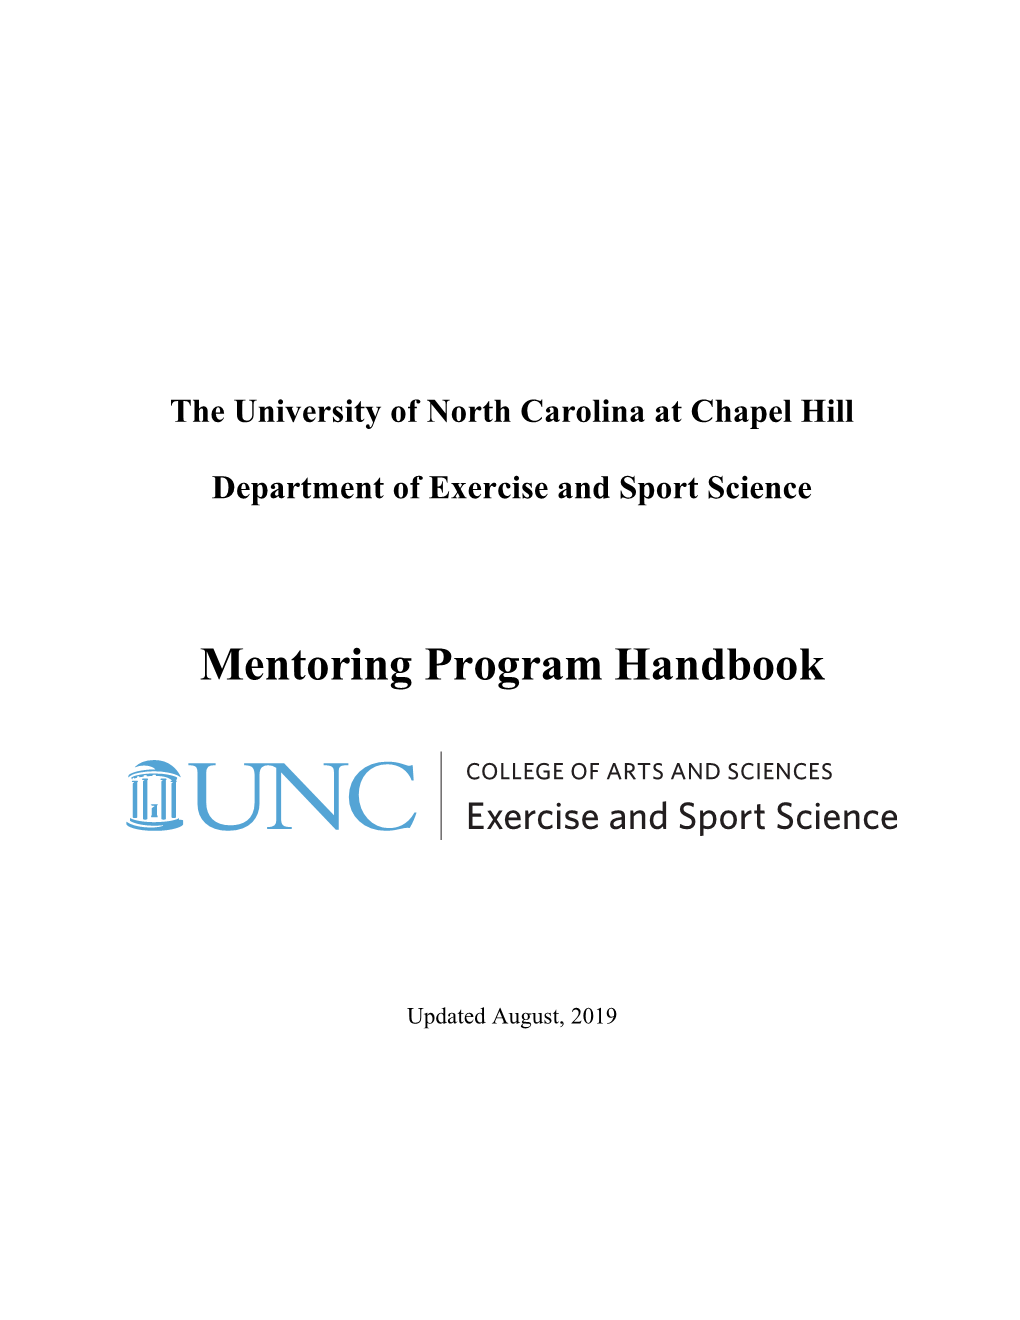 EXSS Mentoring Program Handbook with Appendices